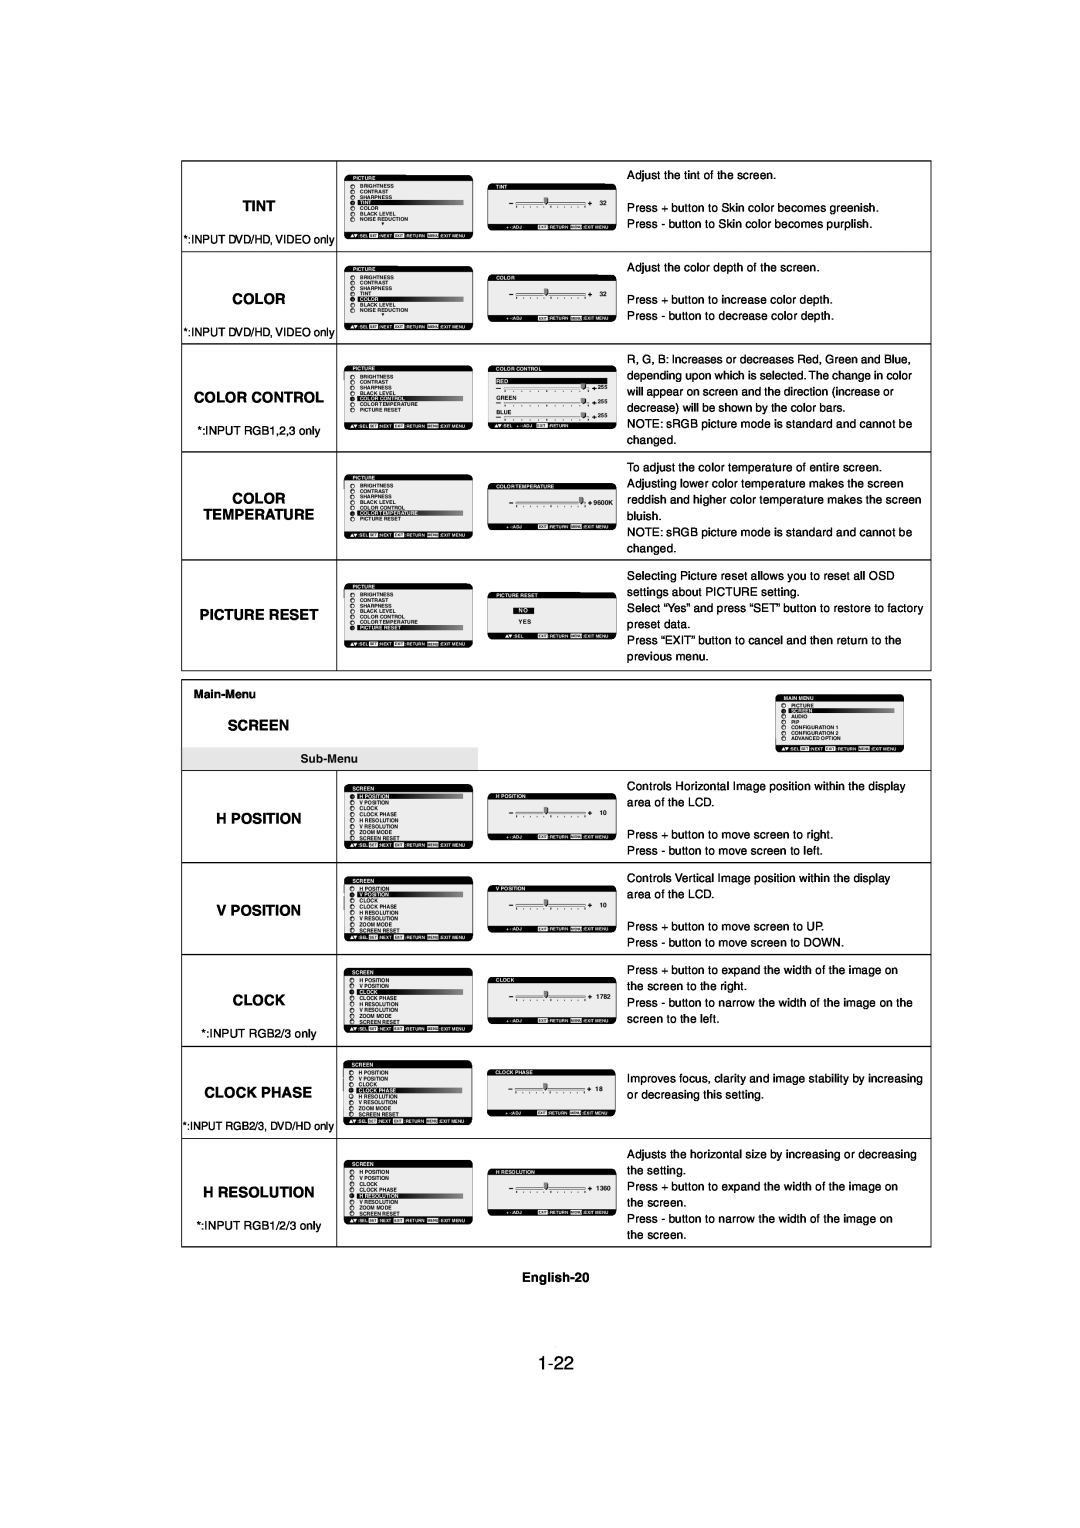 Mitsubishi Electronics MDT321S user manual 1-22, Tint, Color, Temperature, Picture Reset 